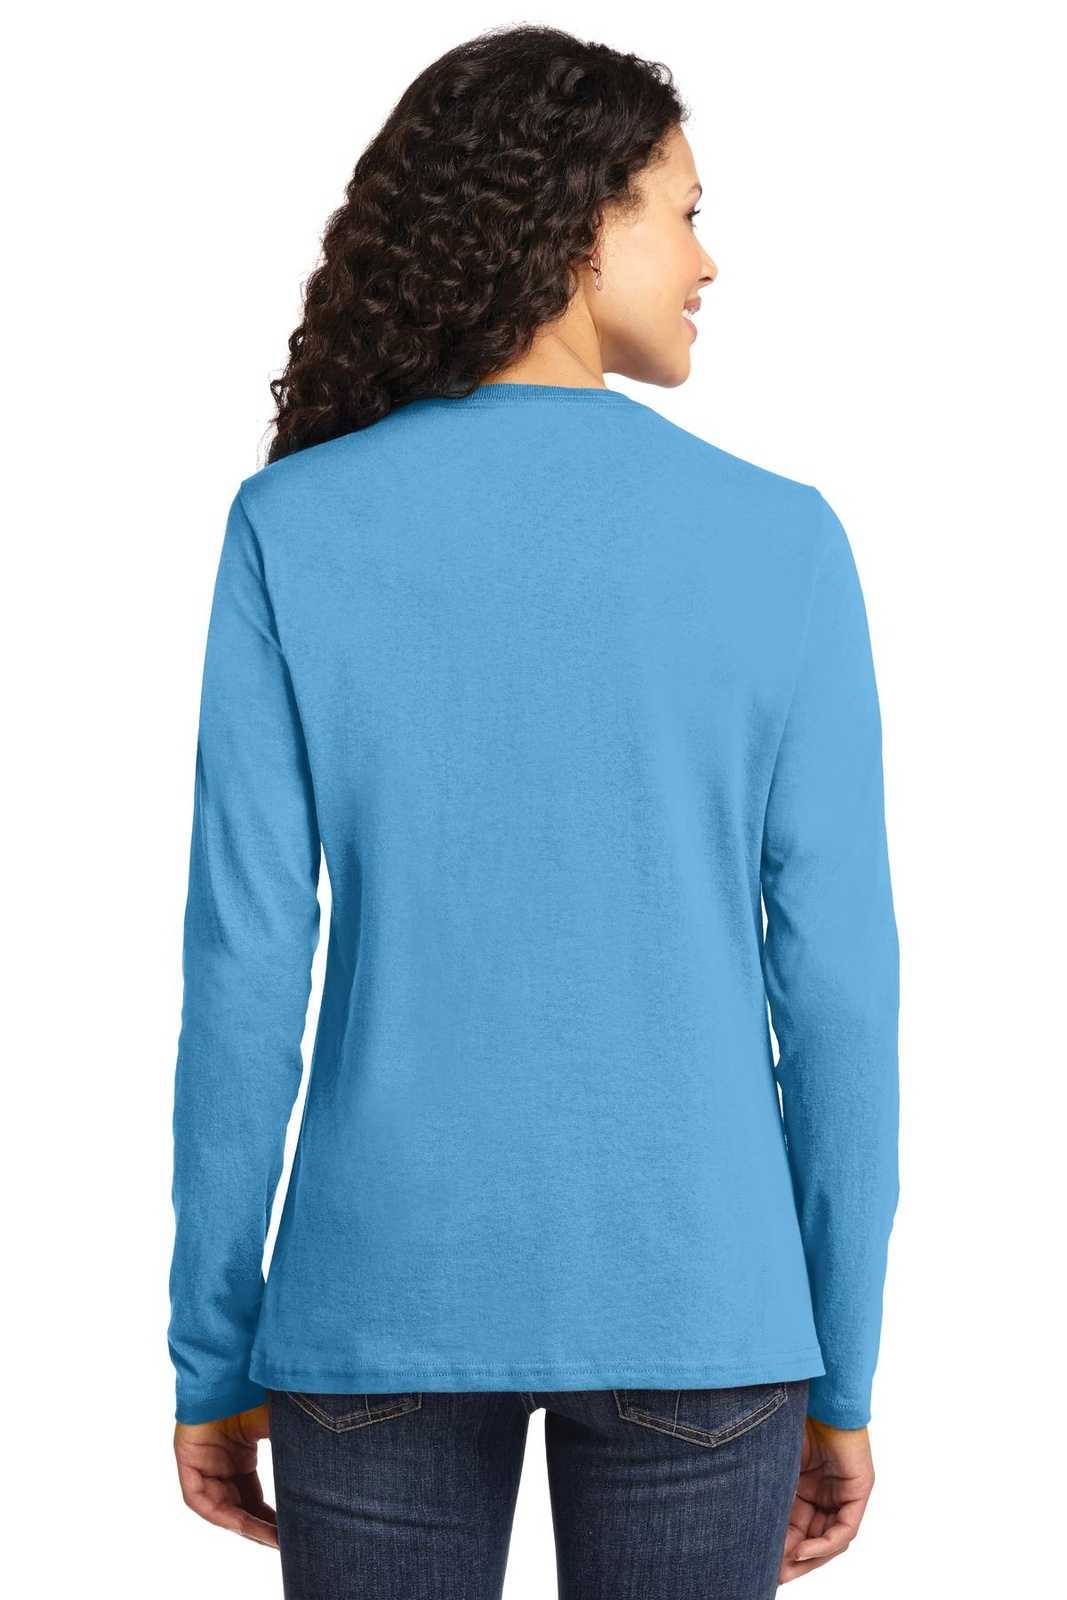 Port & Company LPC54LS Ladies Long Sleeve Core Cotton Tee - Aquatic Blue - HIT a Double - 1